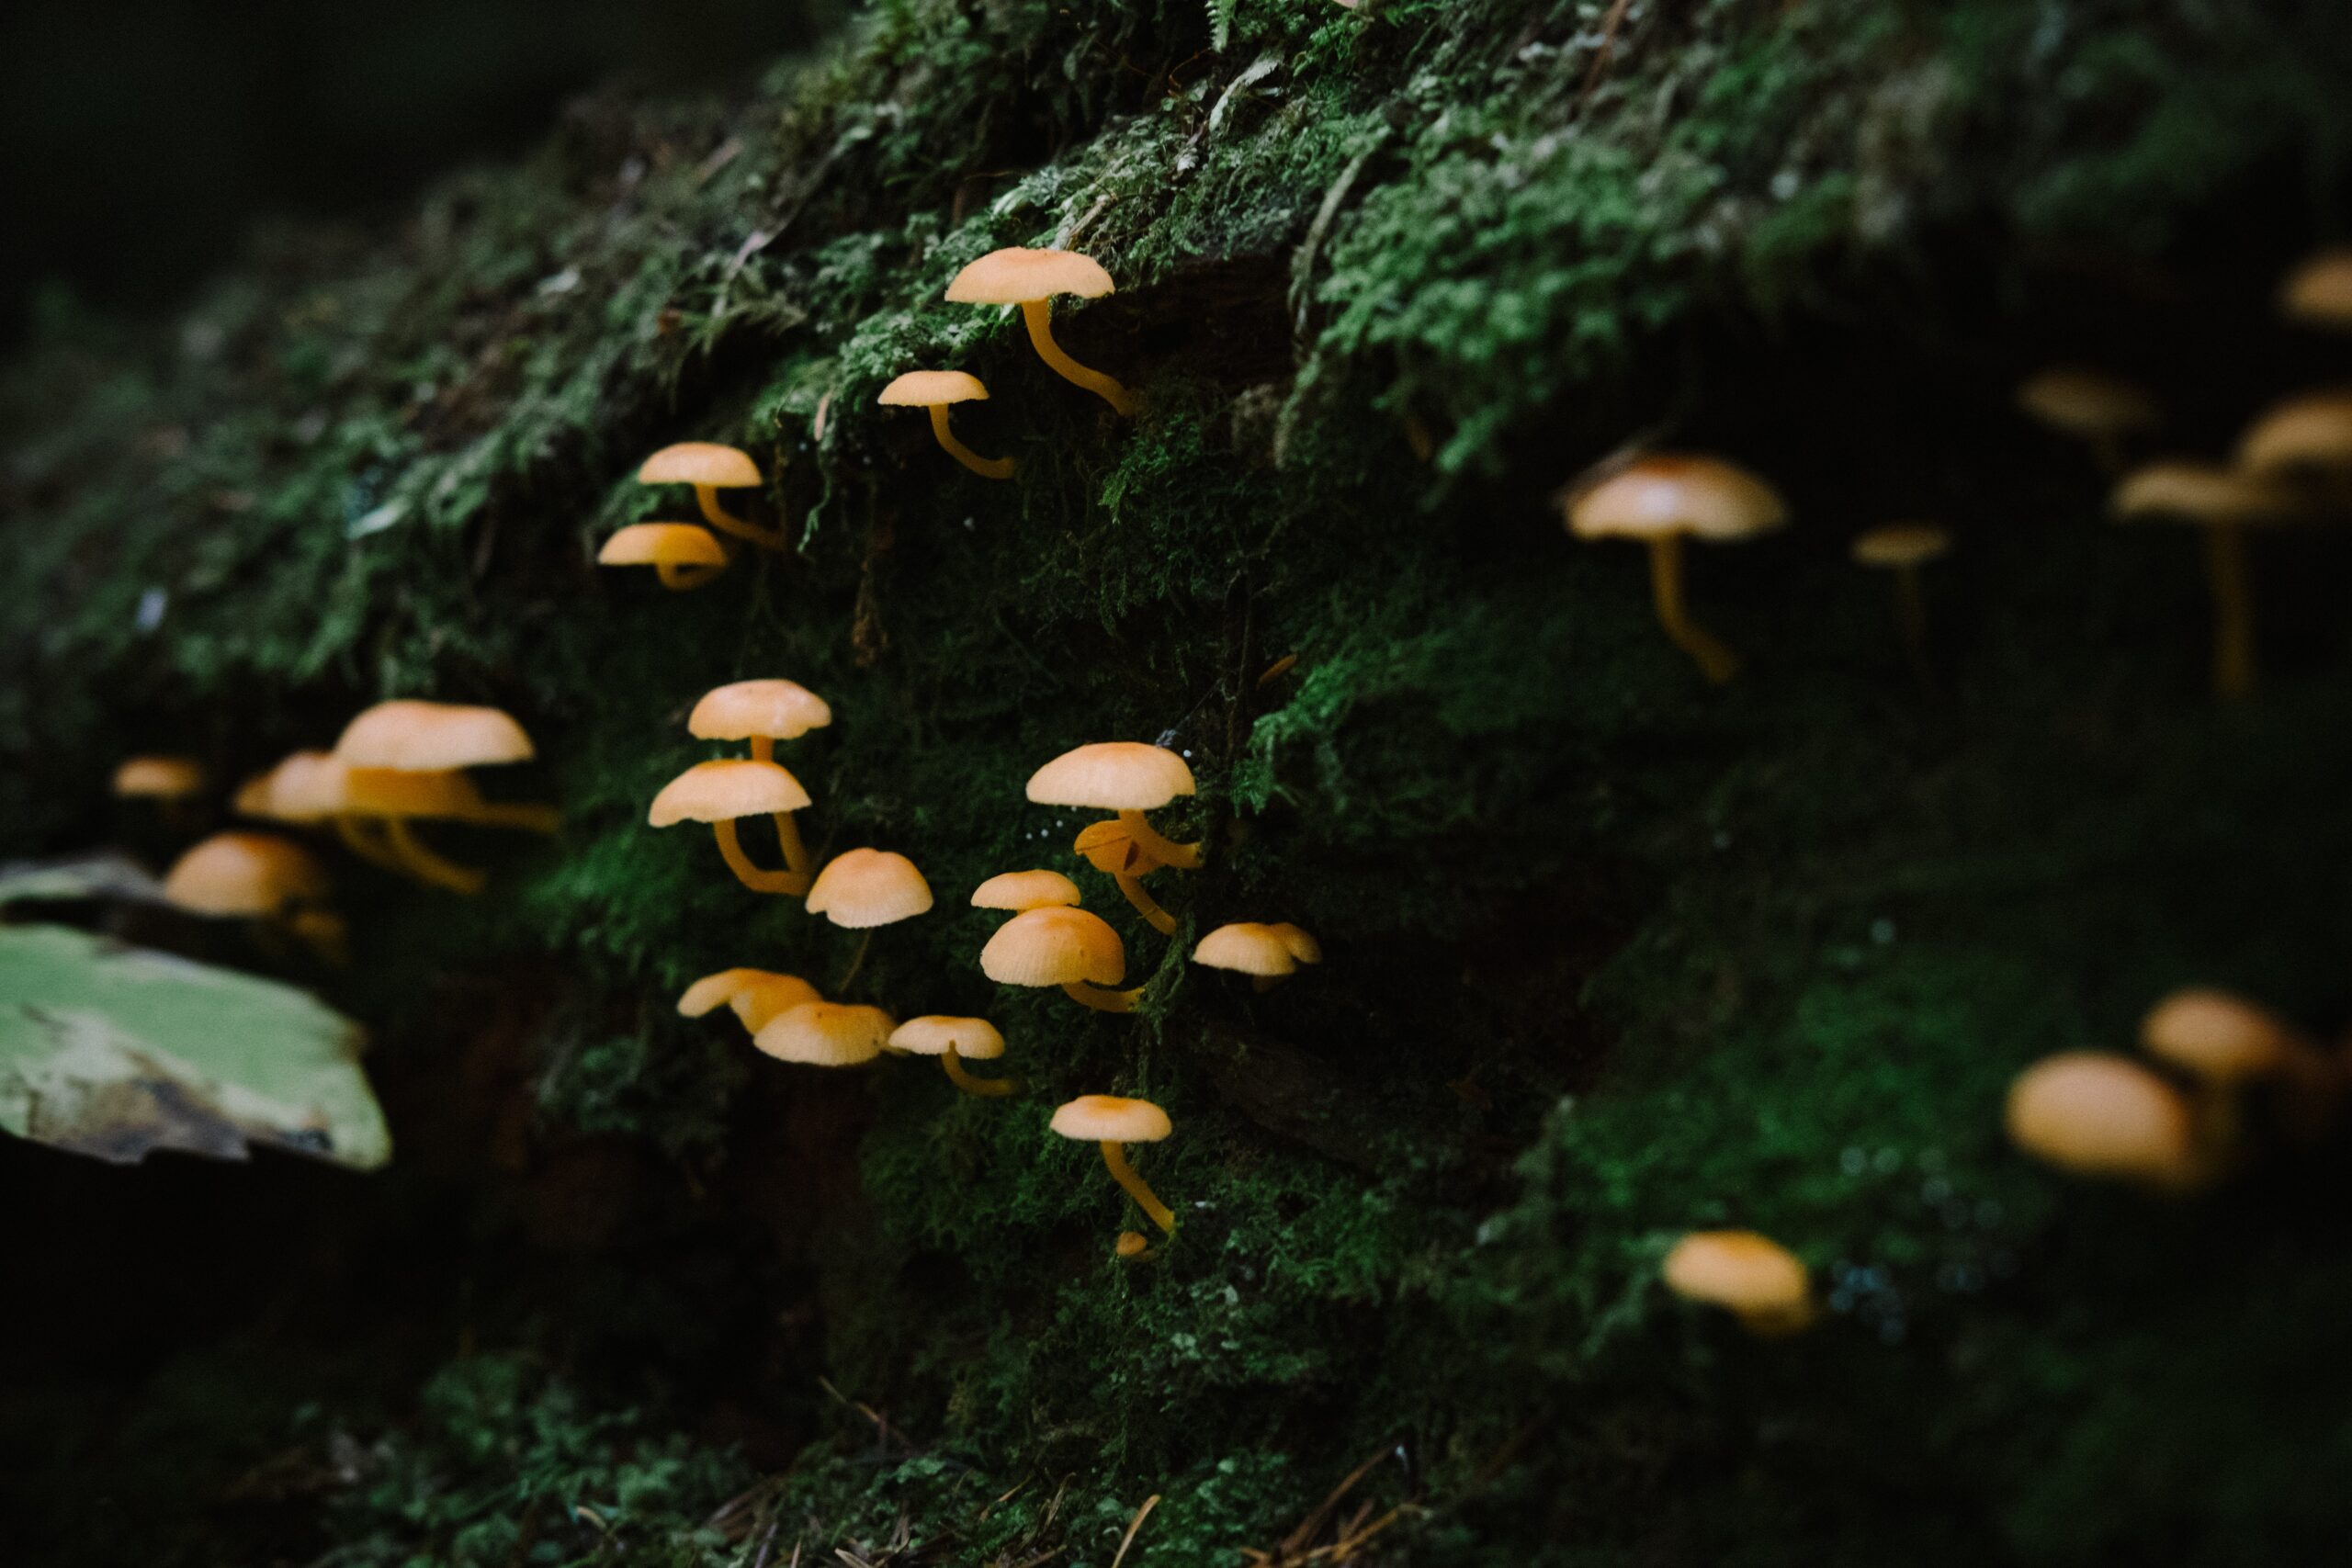 Identifying Types of Magic Mushrooms